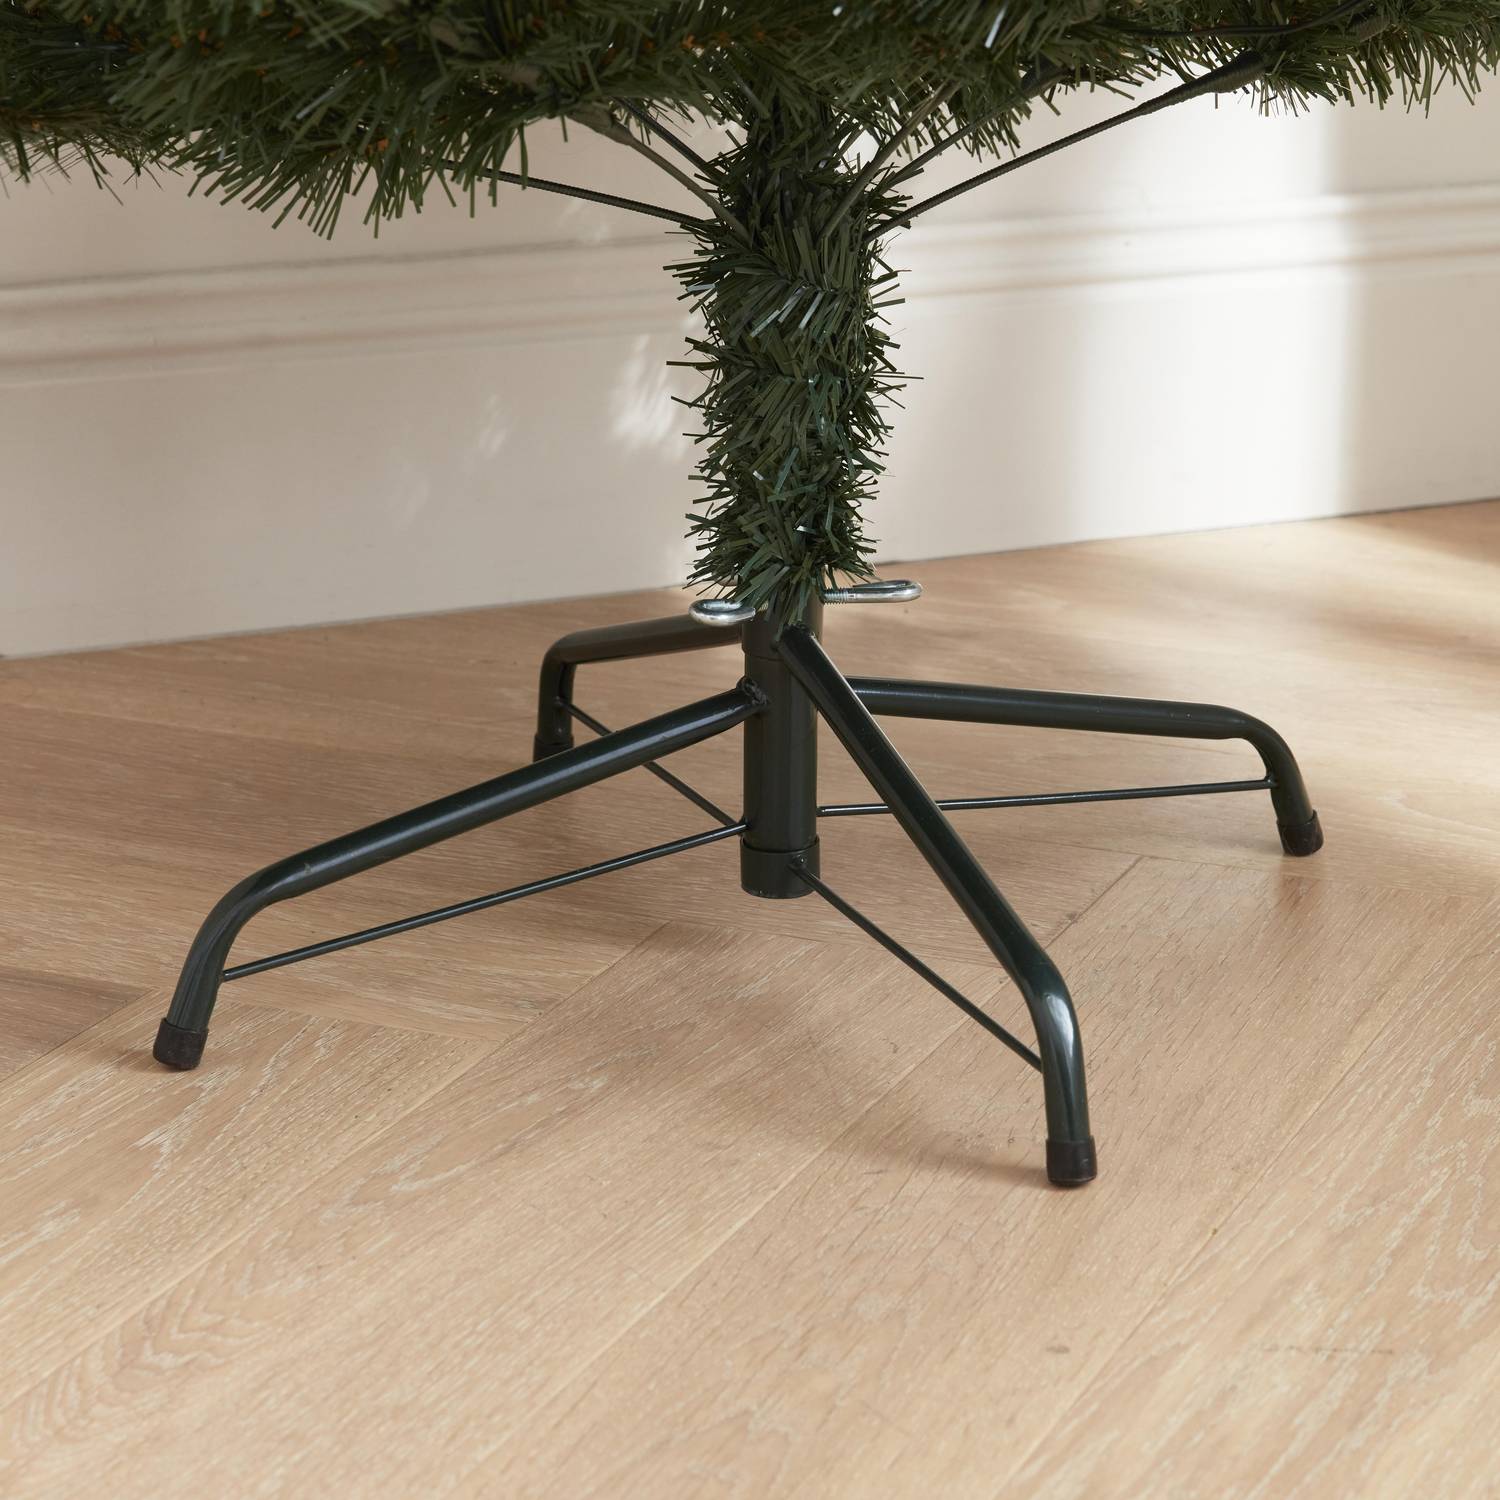 Sapin de Noël artificiel de 210 cm avec guirlande lumineuse et pied inclus Photo5